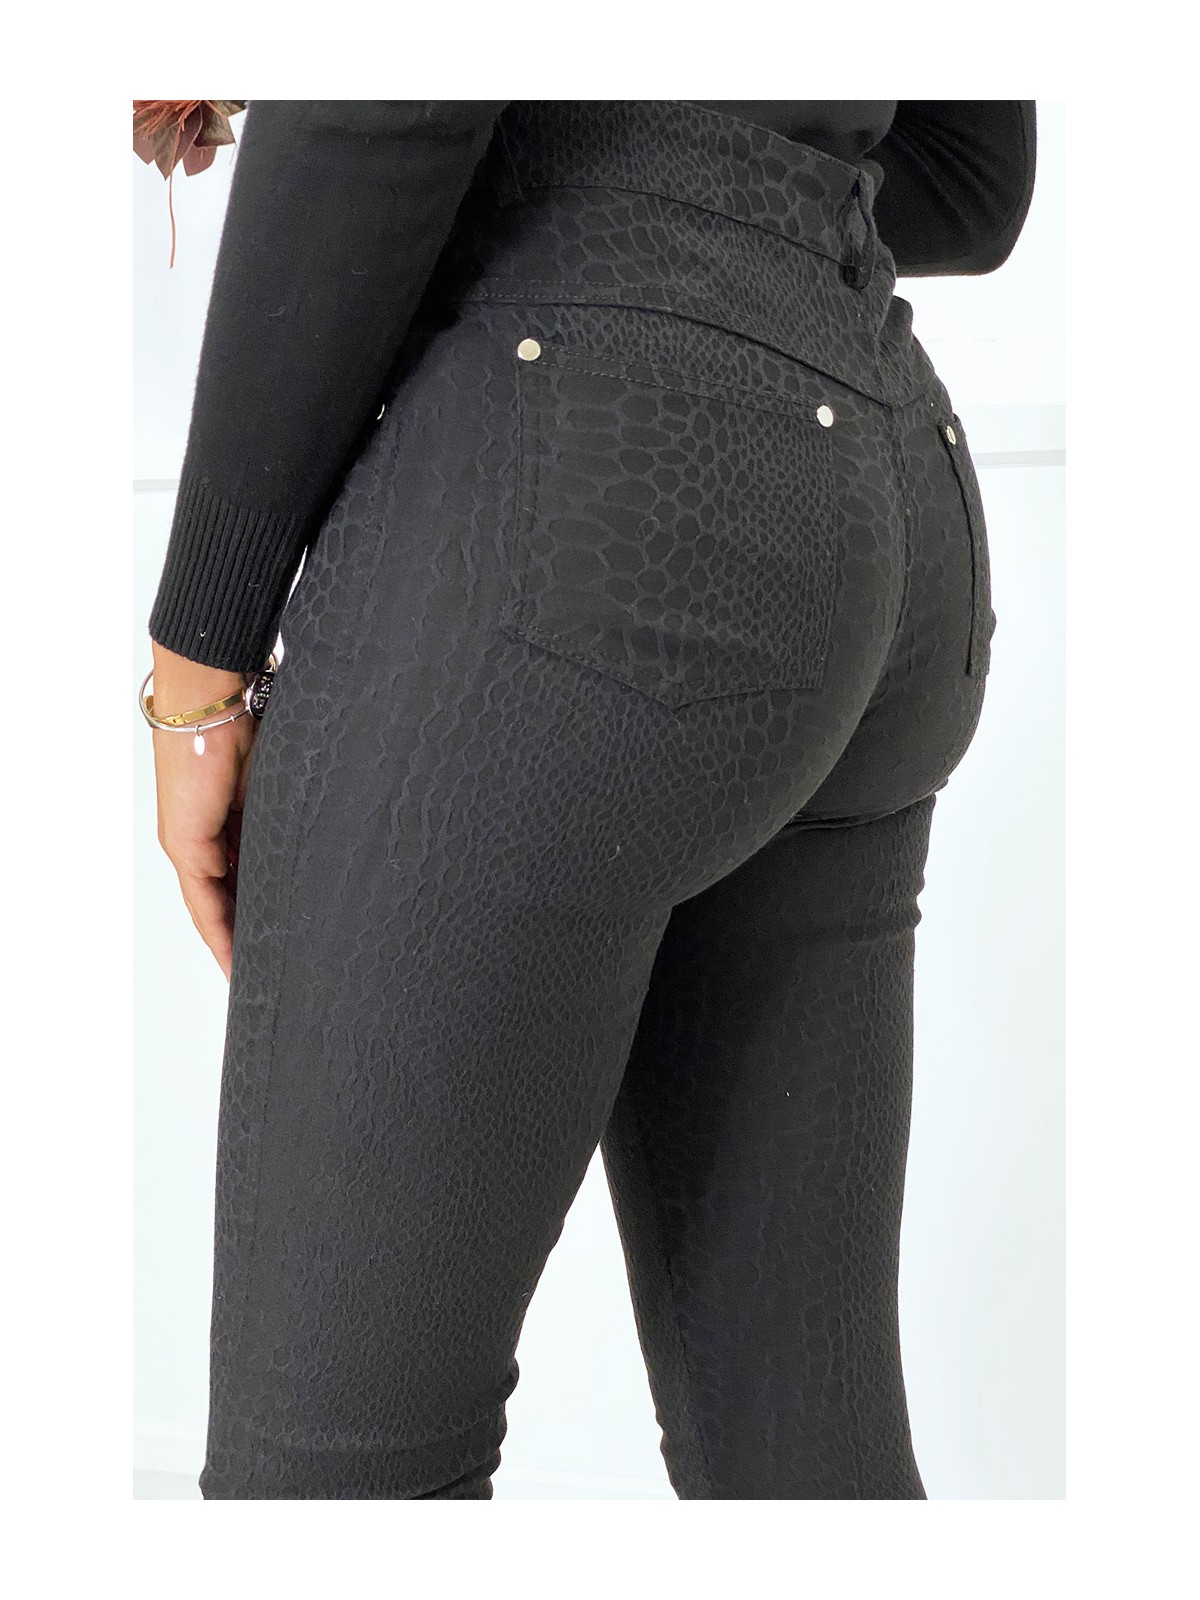 Pantalon slim noir motif python avec 5 poches - 7